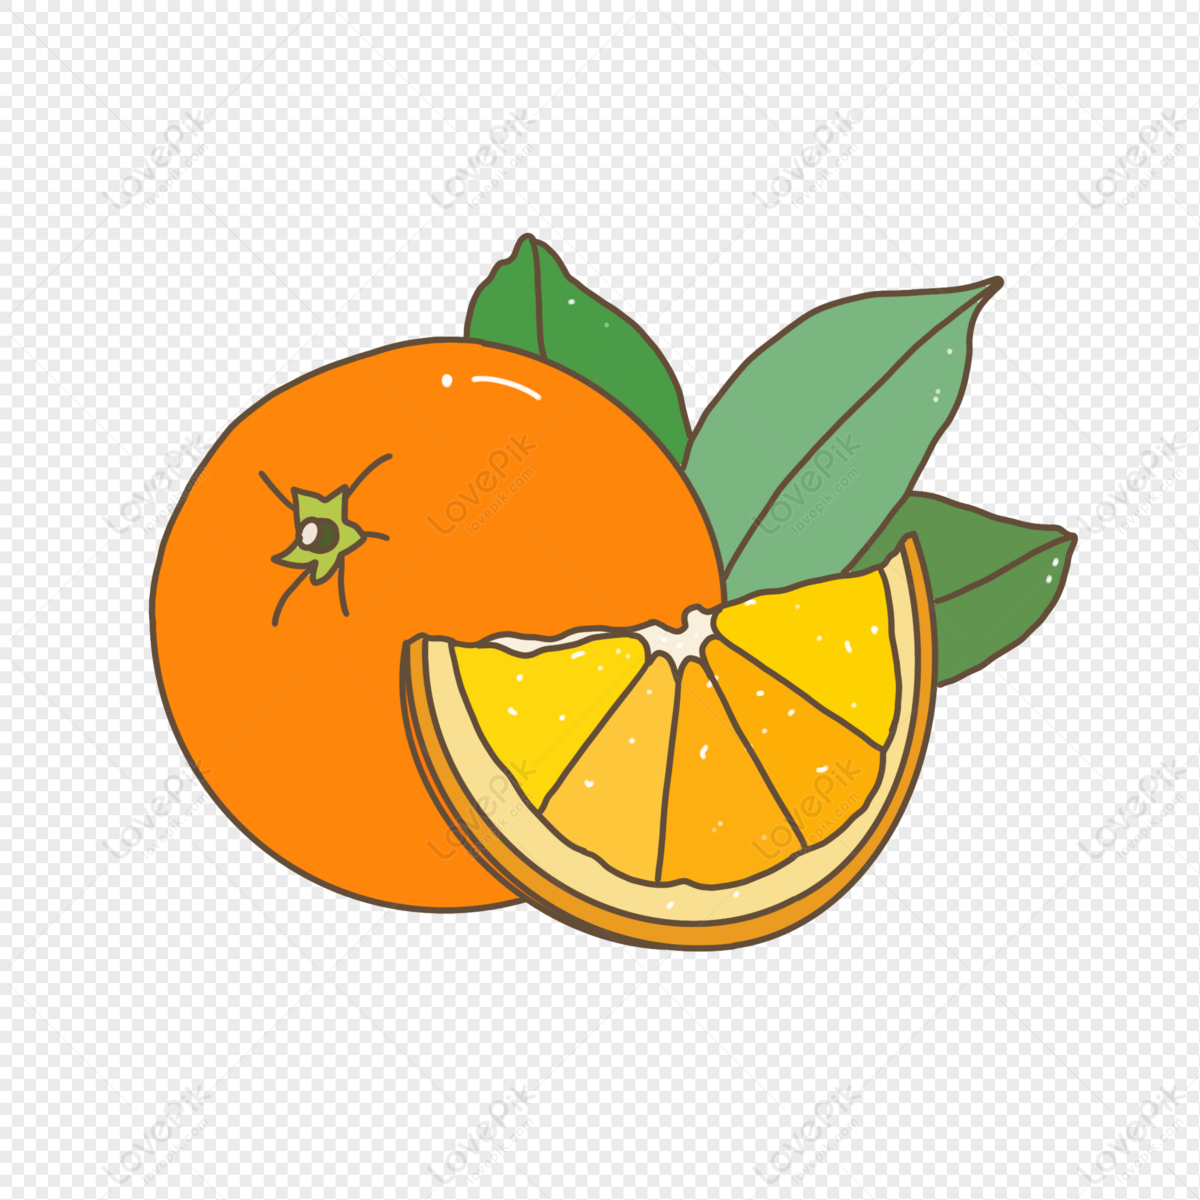 Cute Cartoon Fruit Orange Orange PNG Free Download And Clipart Image For  Free Download - Lovepik | 401529813